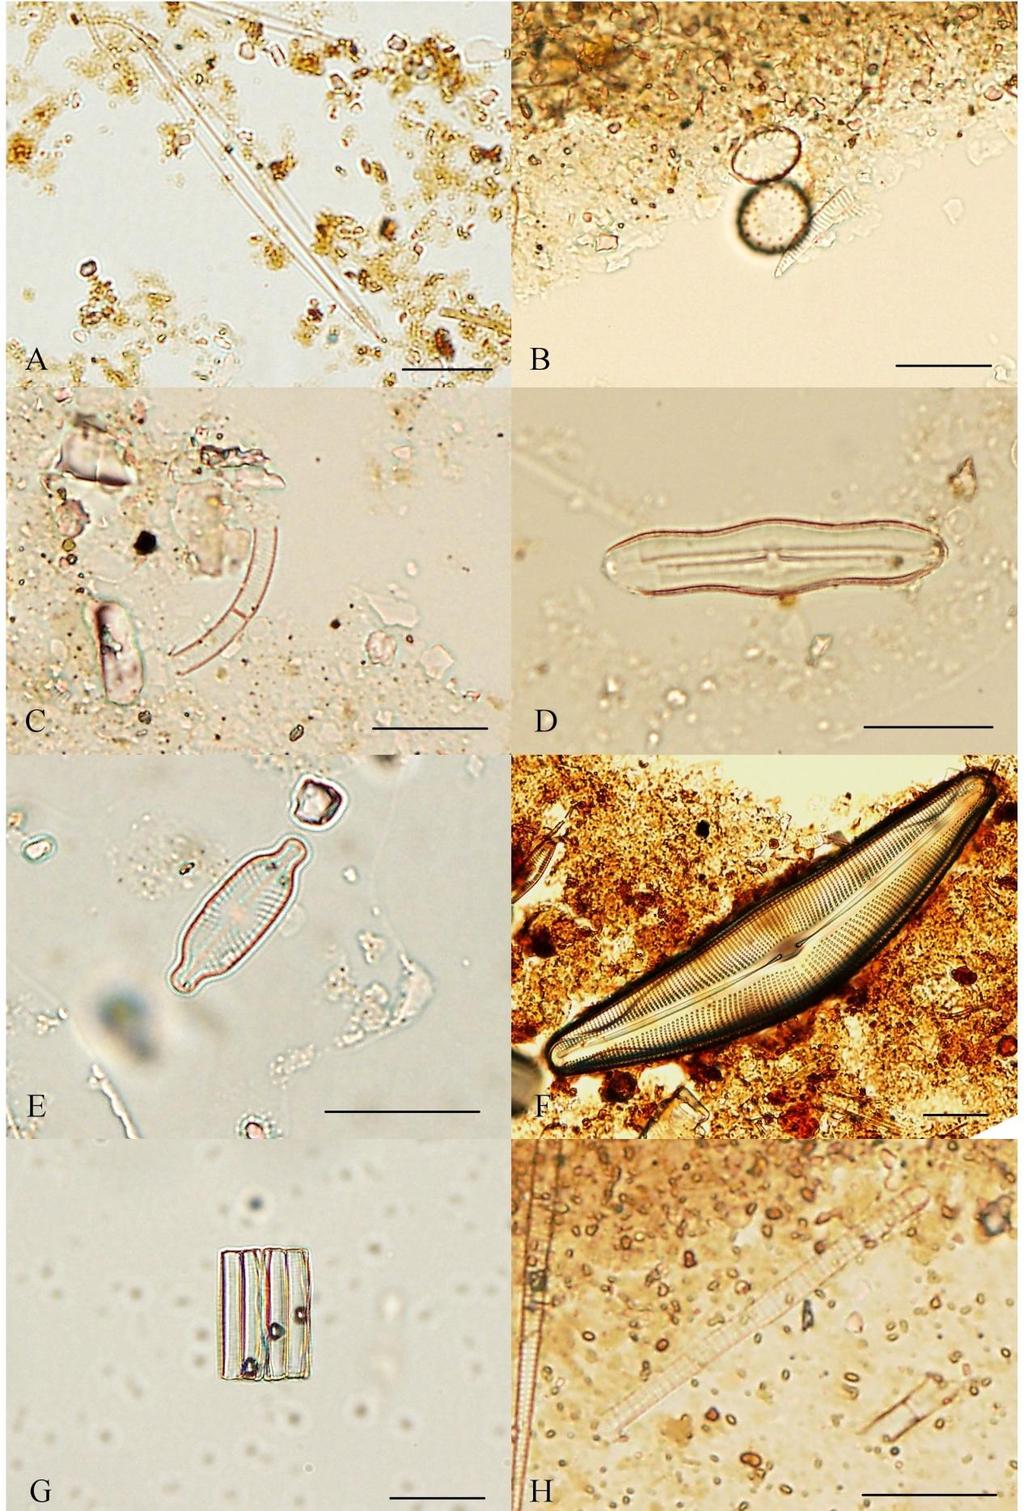 Příloha 12: Fotodokumentace vybraných zástupců Bacillariophyceae I (A Amphipleura pellucida, B Aulacoseira distans, C Aulacoseira